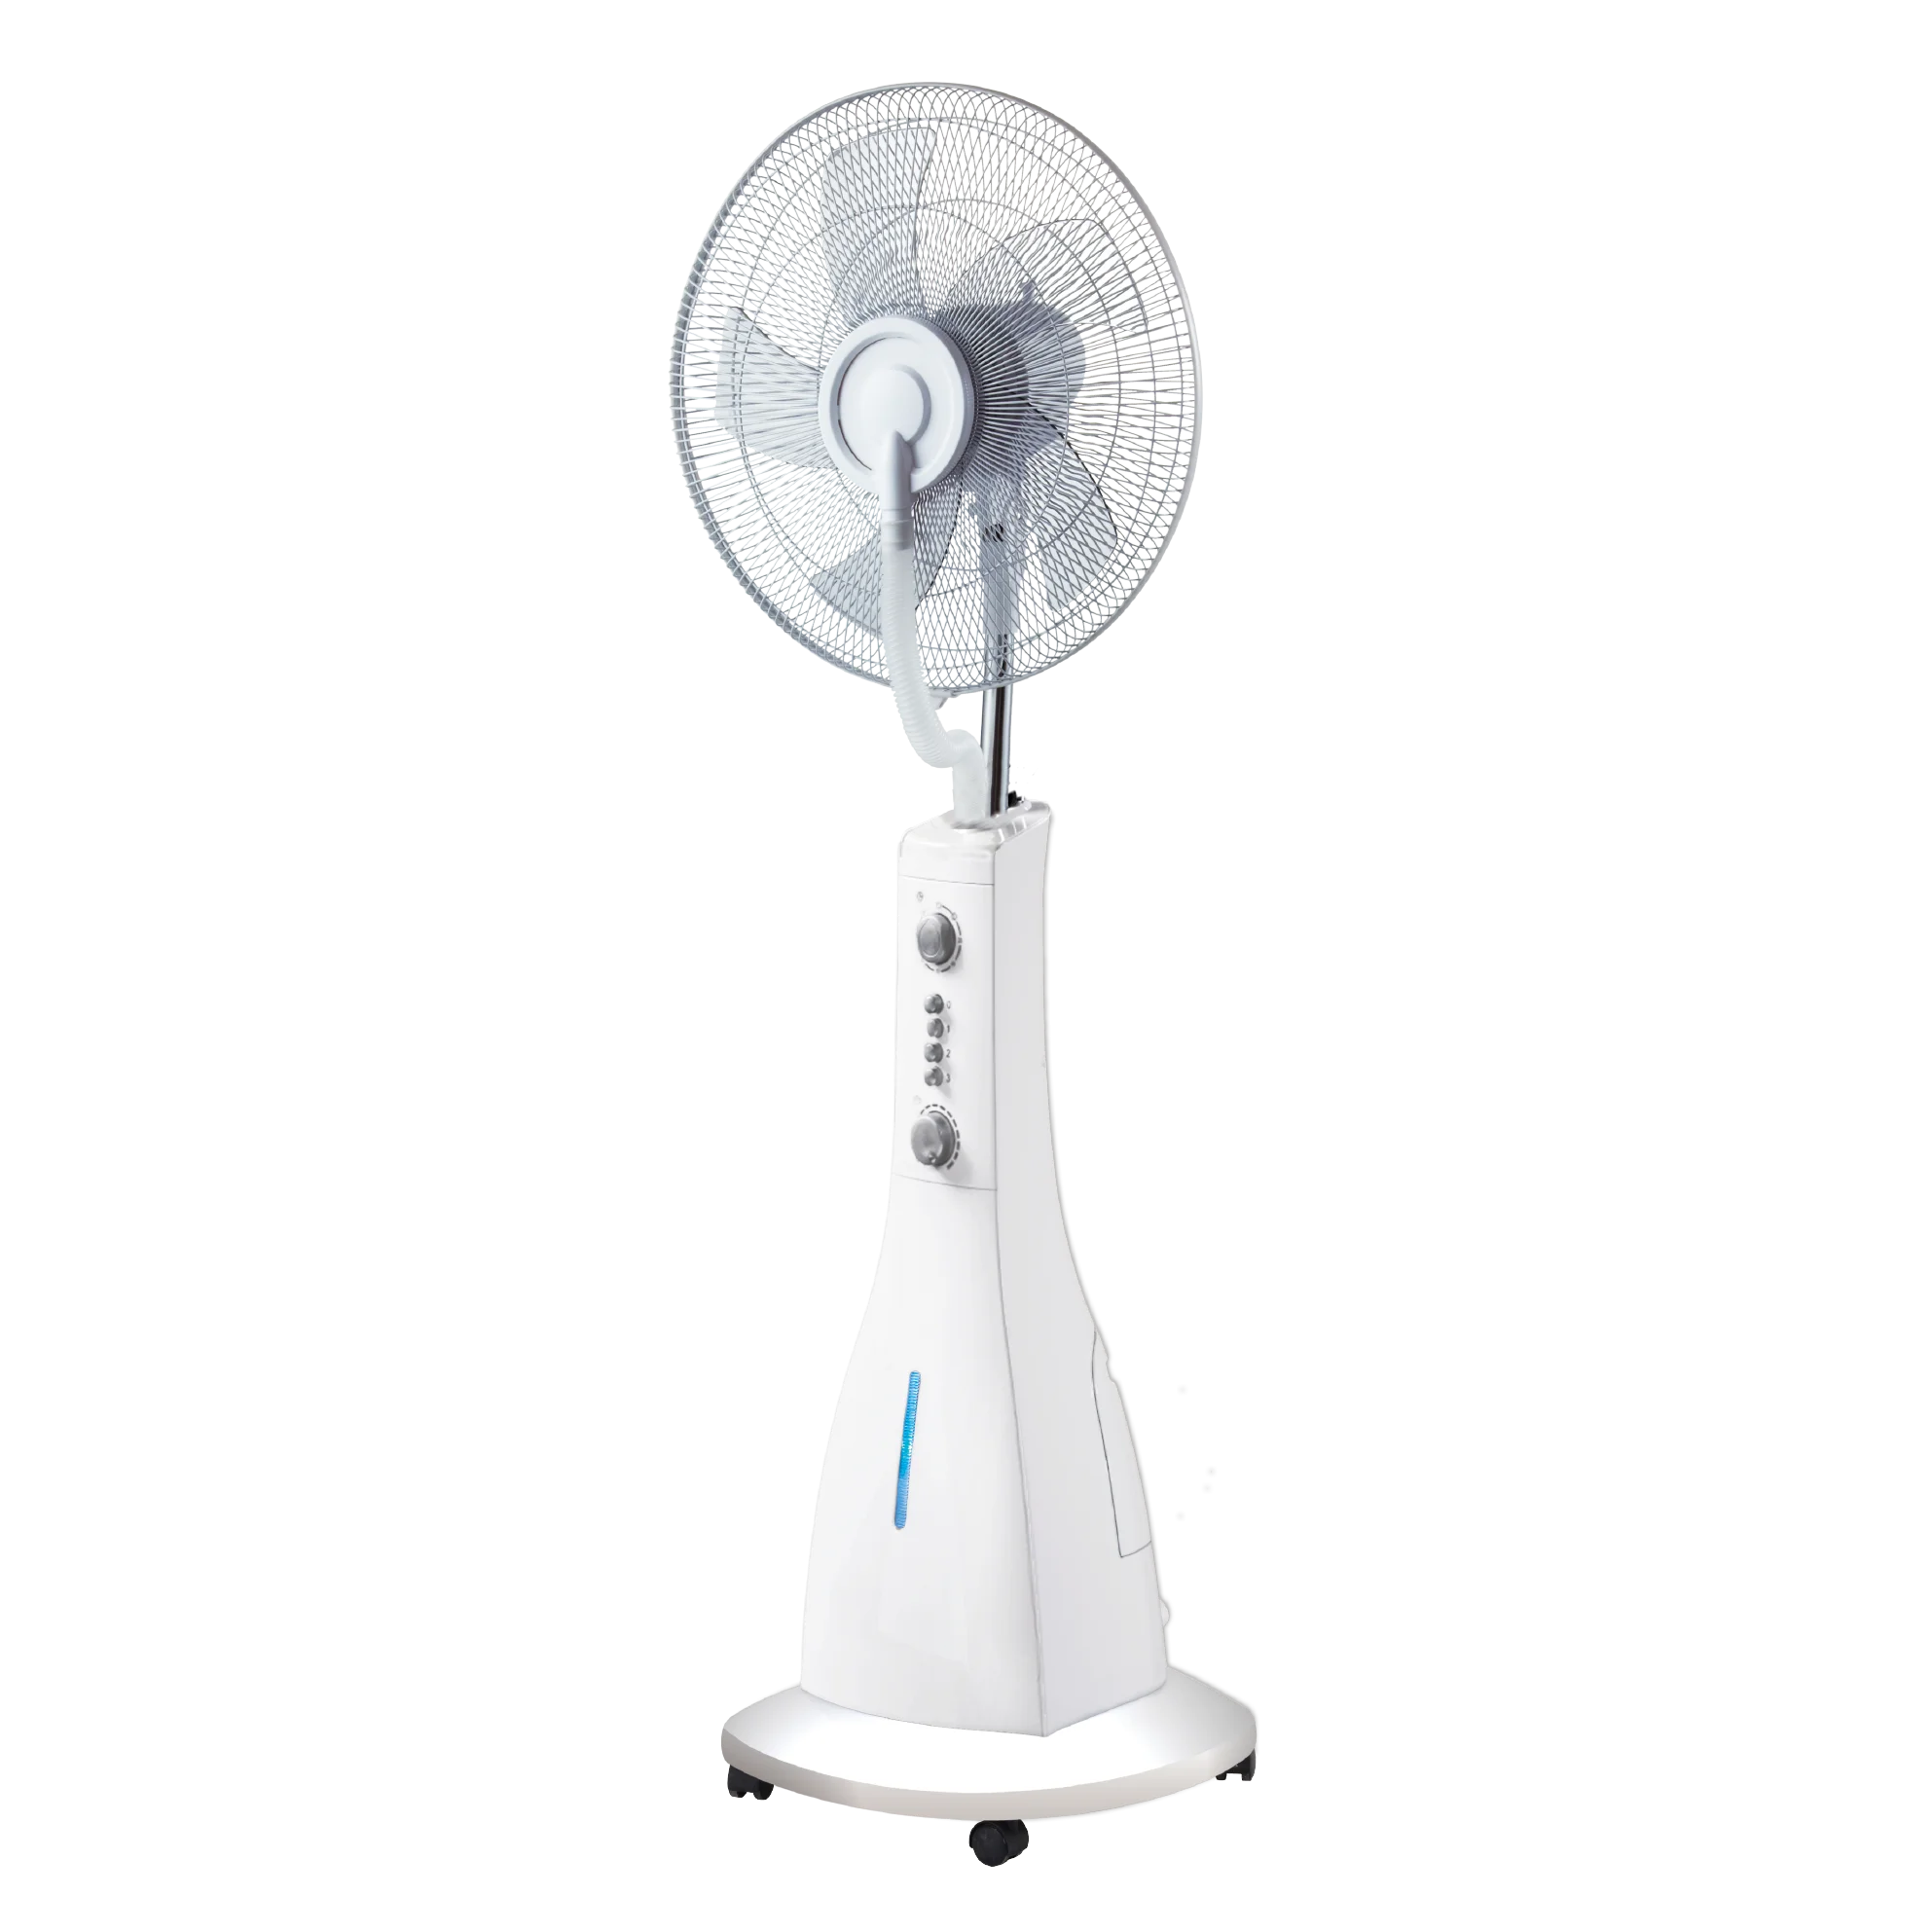 
2019 Ventilador Water Cooling Mist Fan 